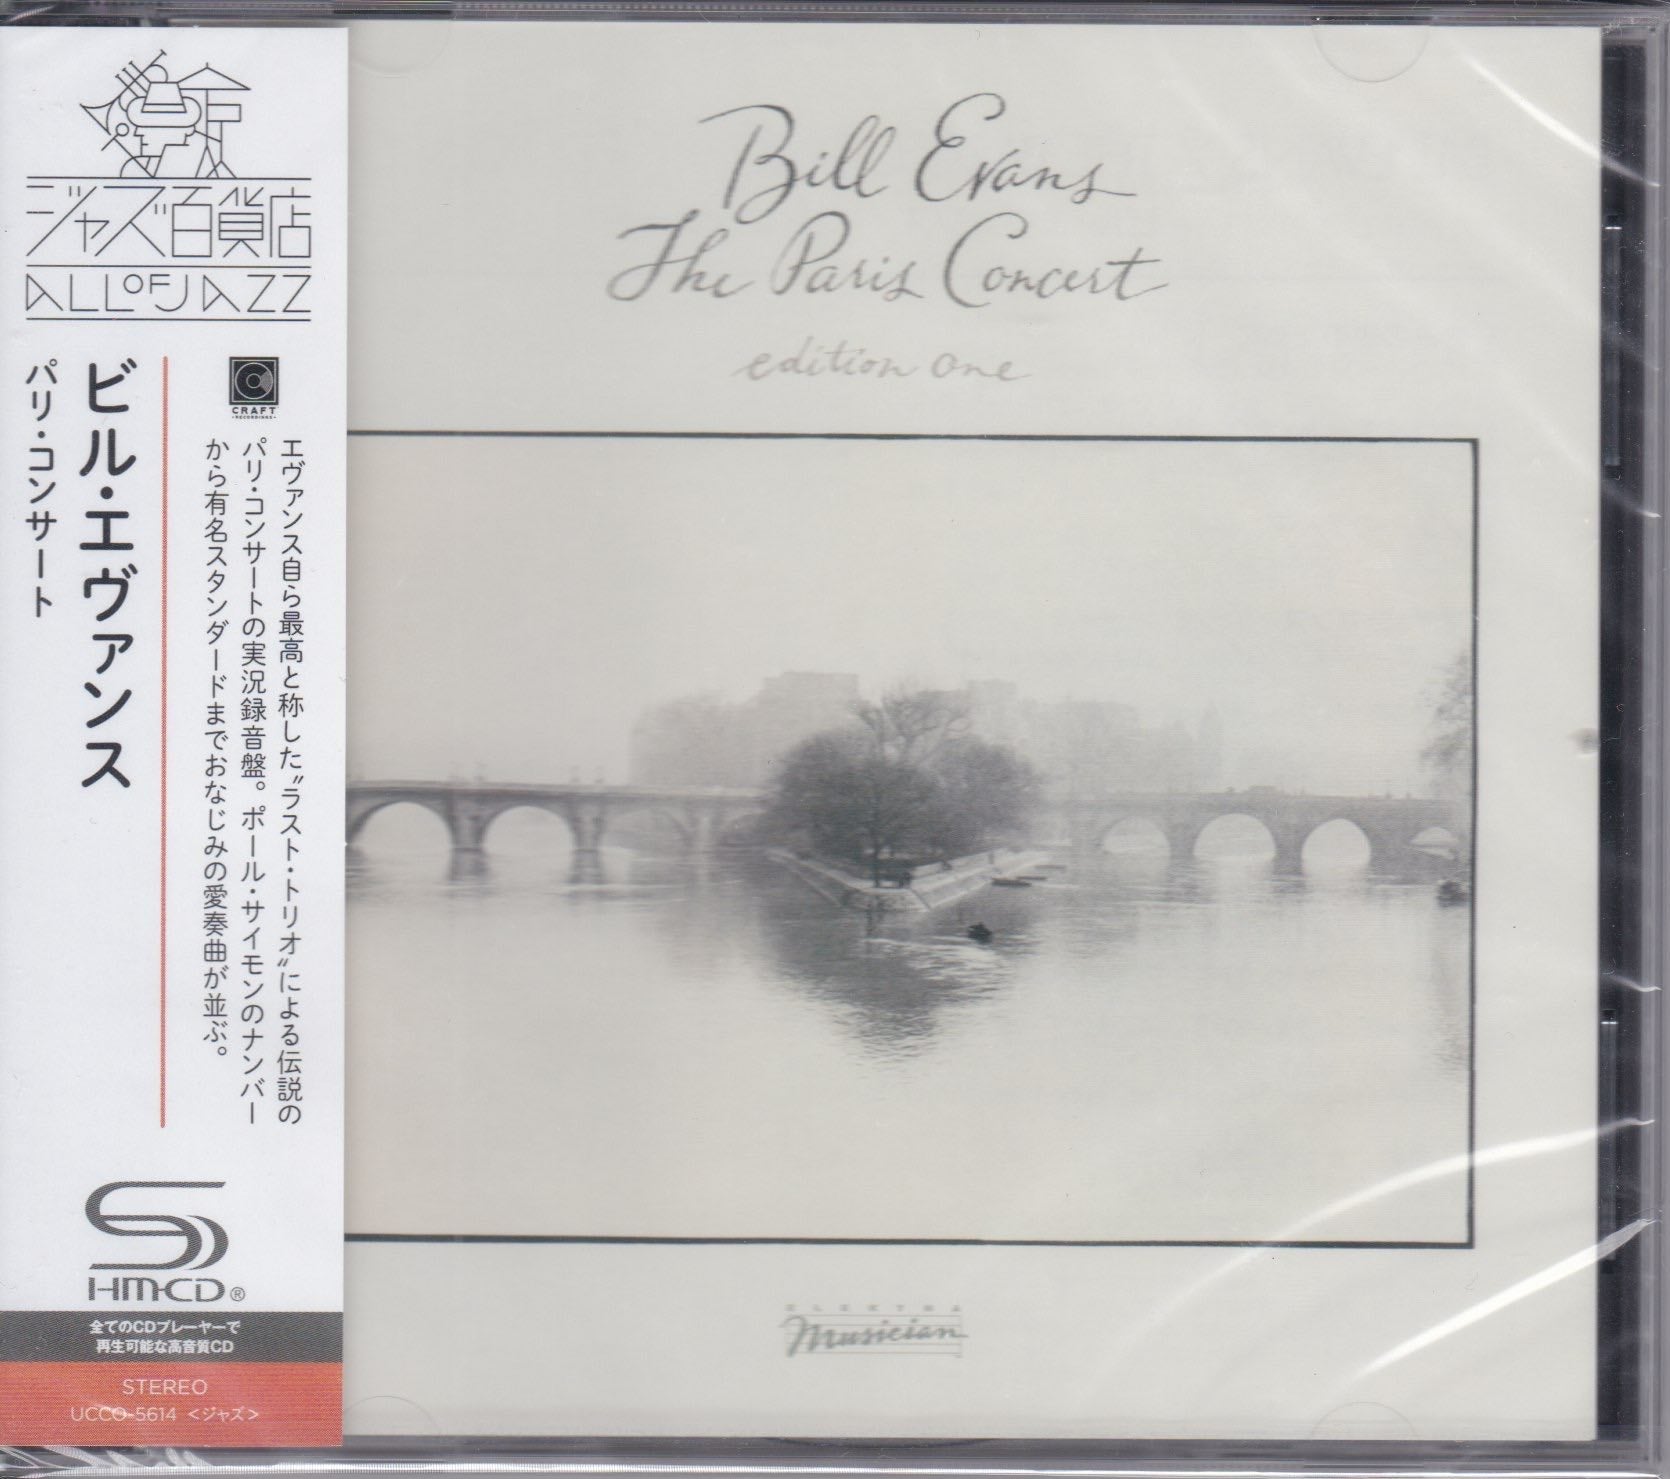 Bill Evans ‎– The Paris Concert (Edition One)